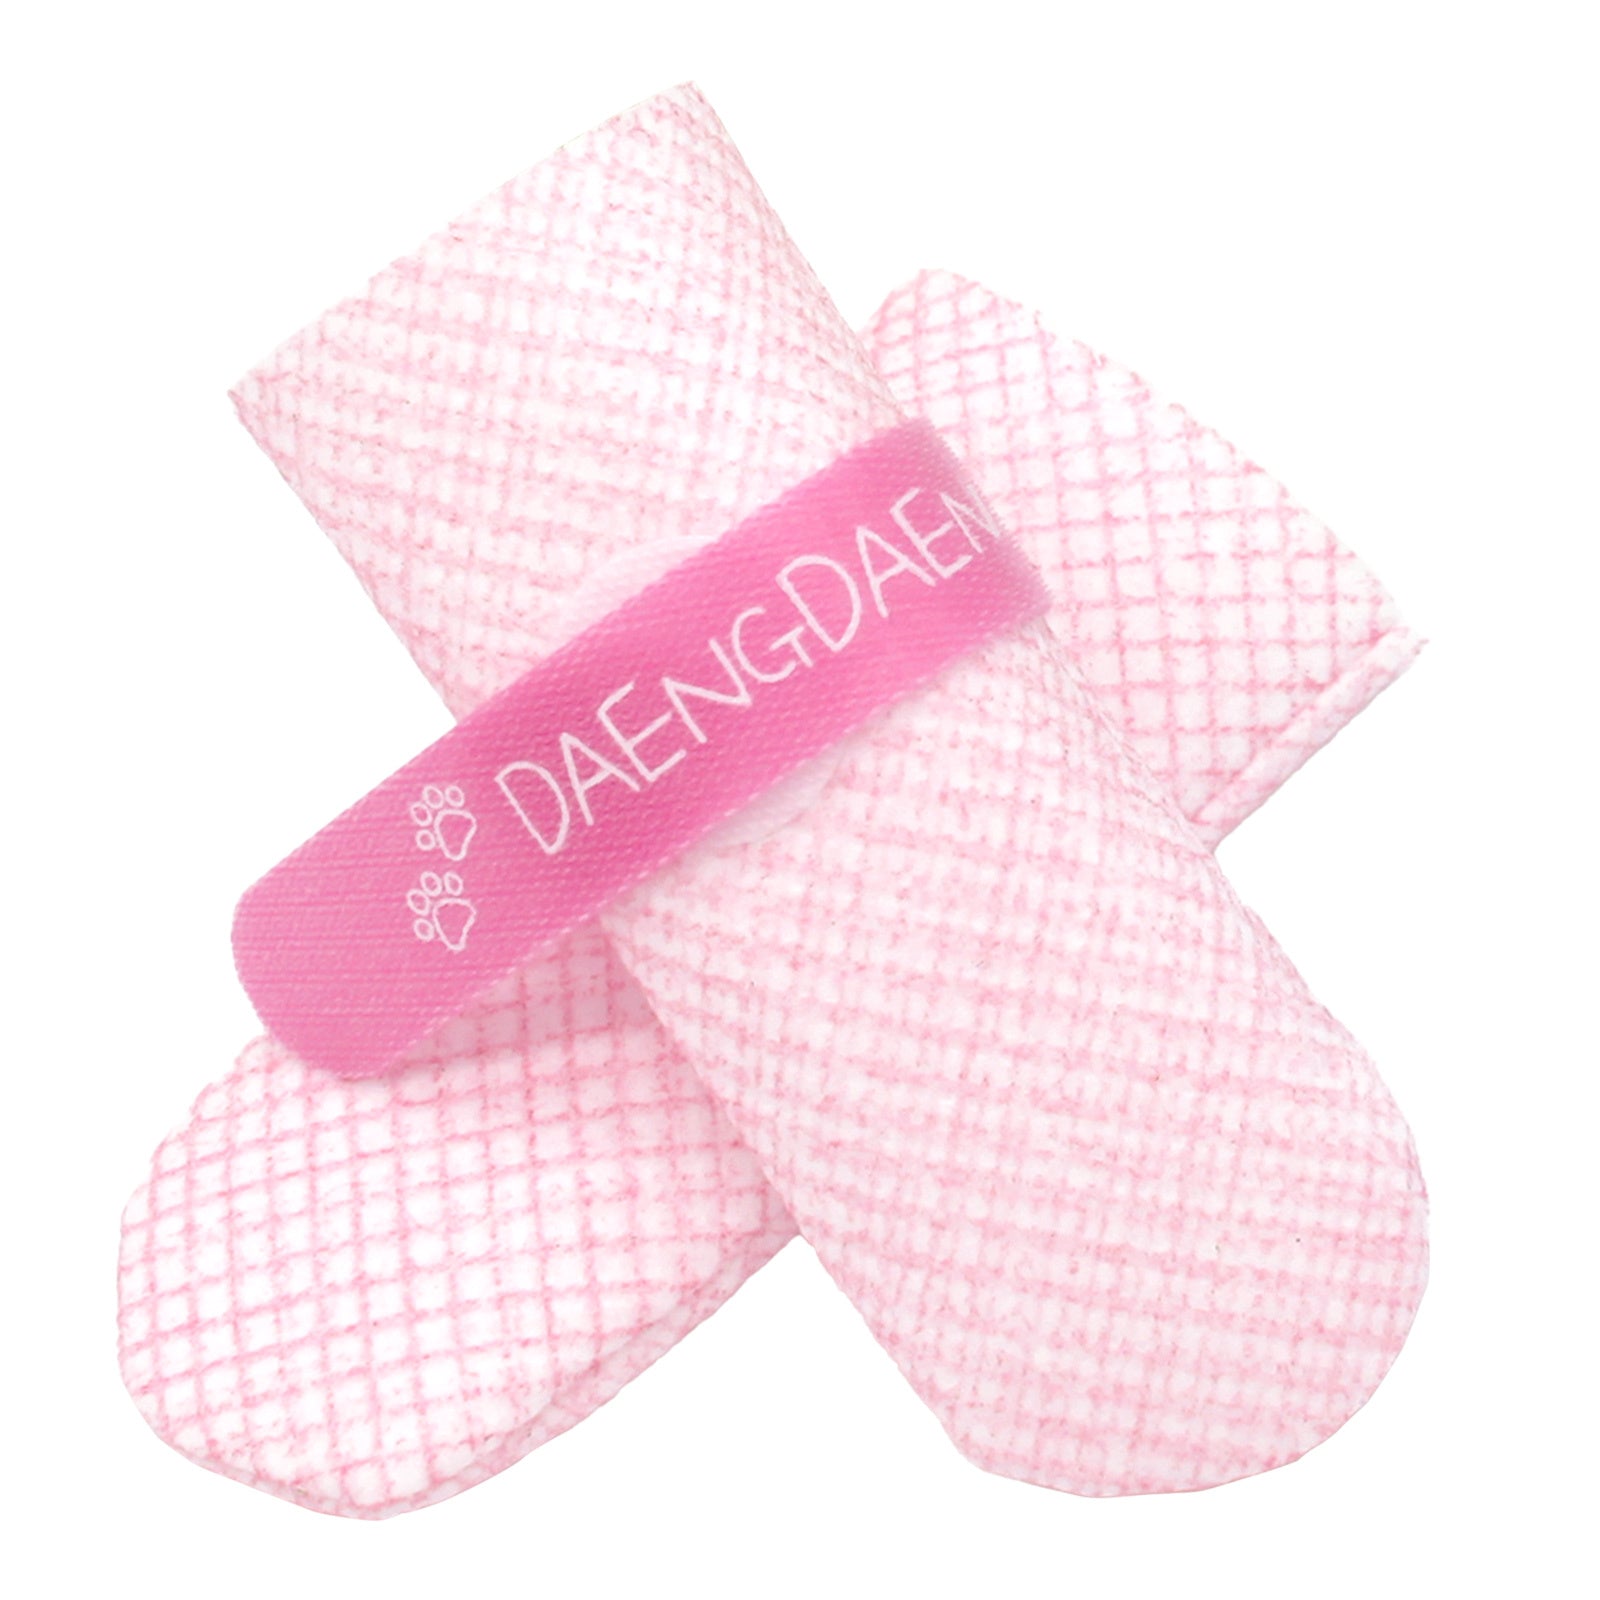 Daeng Daeng Shoes 28pc L Pink Dog Shoes Waterproof Disposable Boots Anti-Slip Socks Deals499